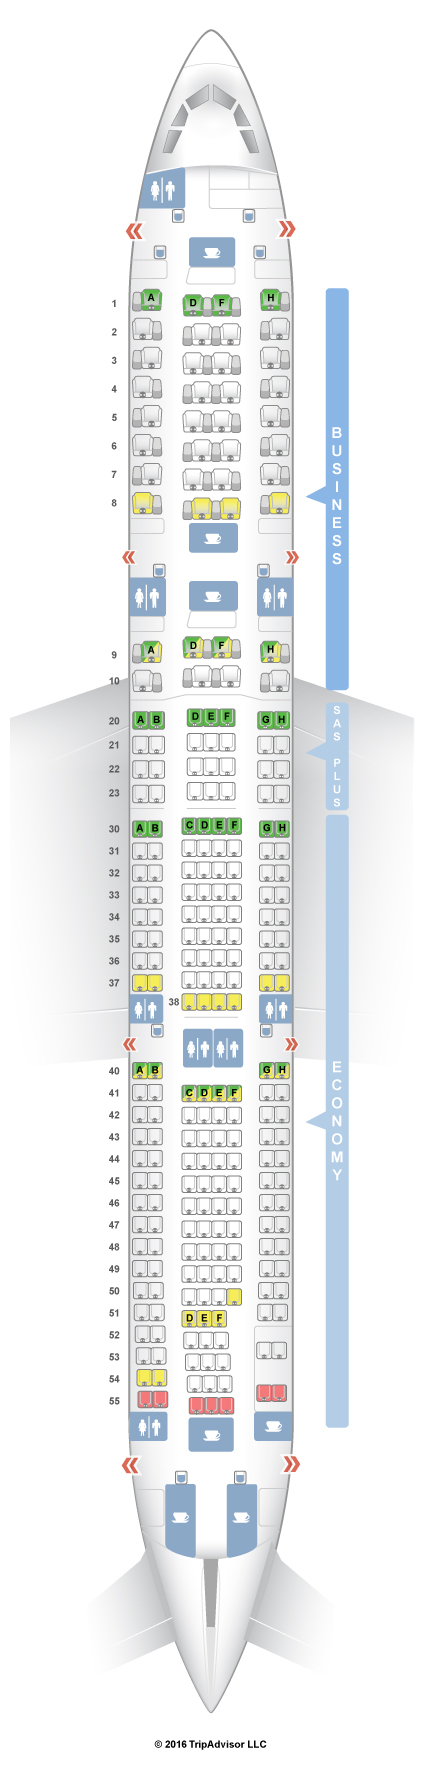 Airbus Seating Chart